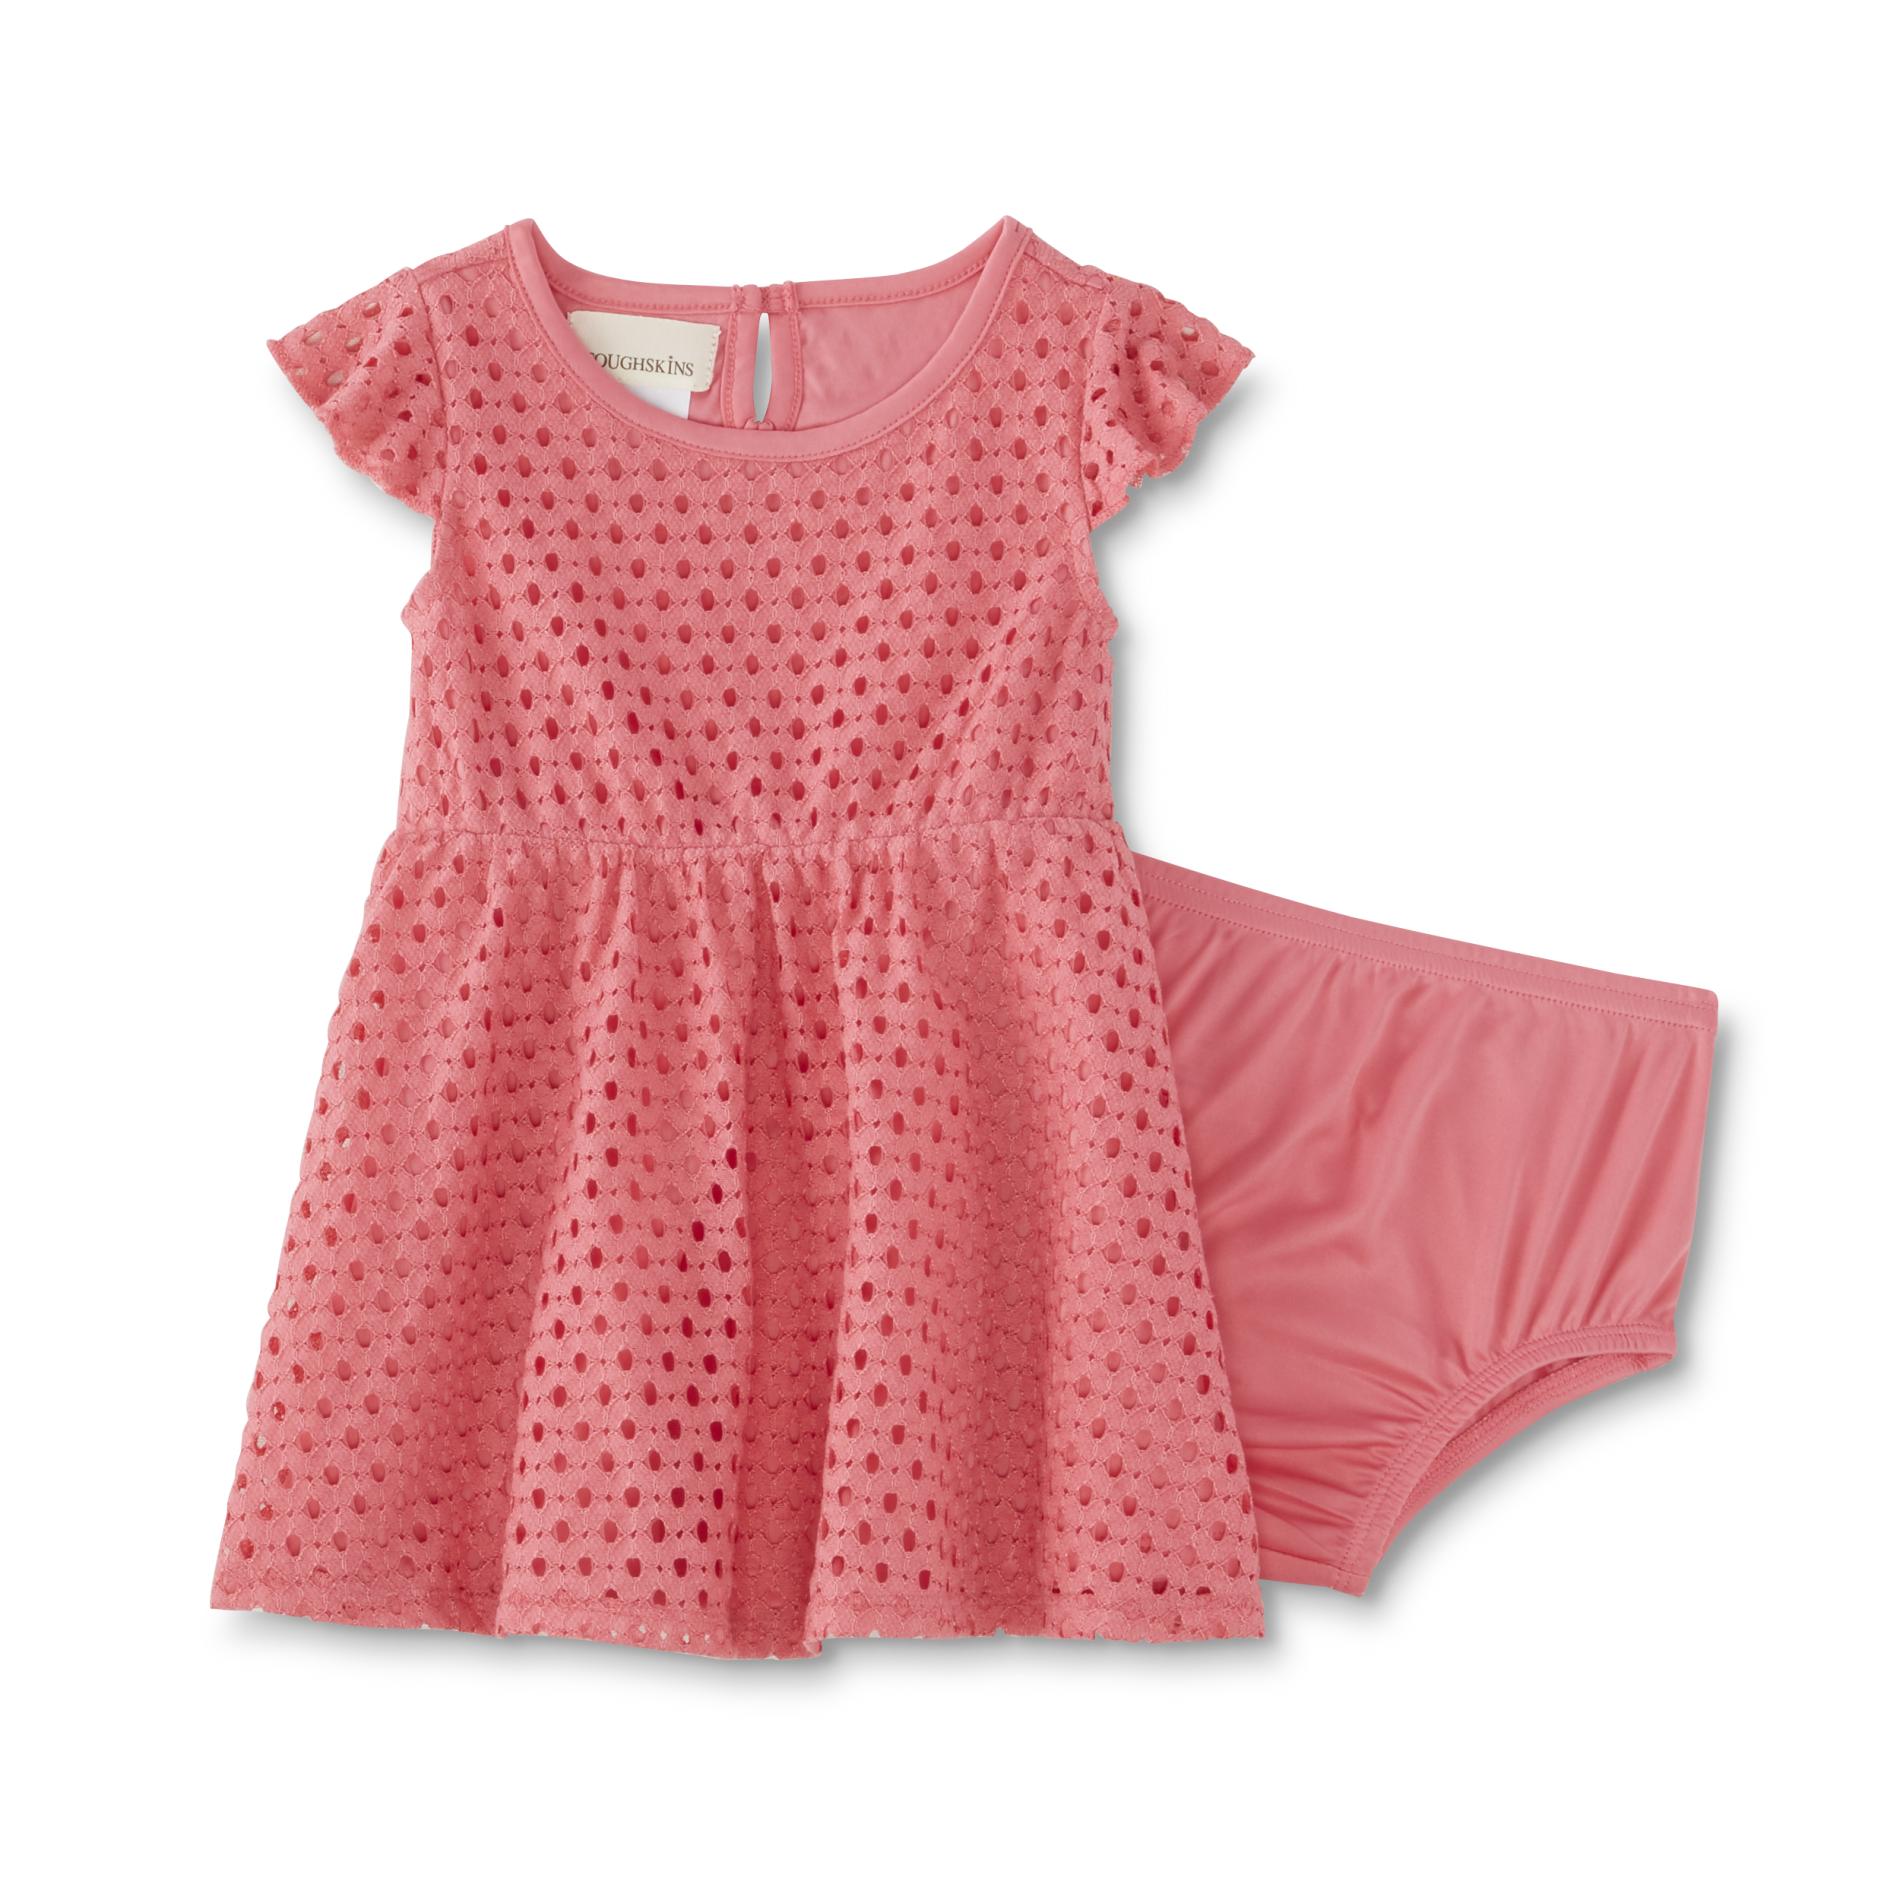 Toughskins Infant Girls' Lace Dress & Diaper Cover